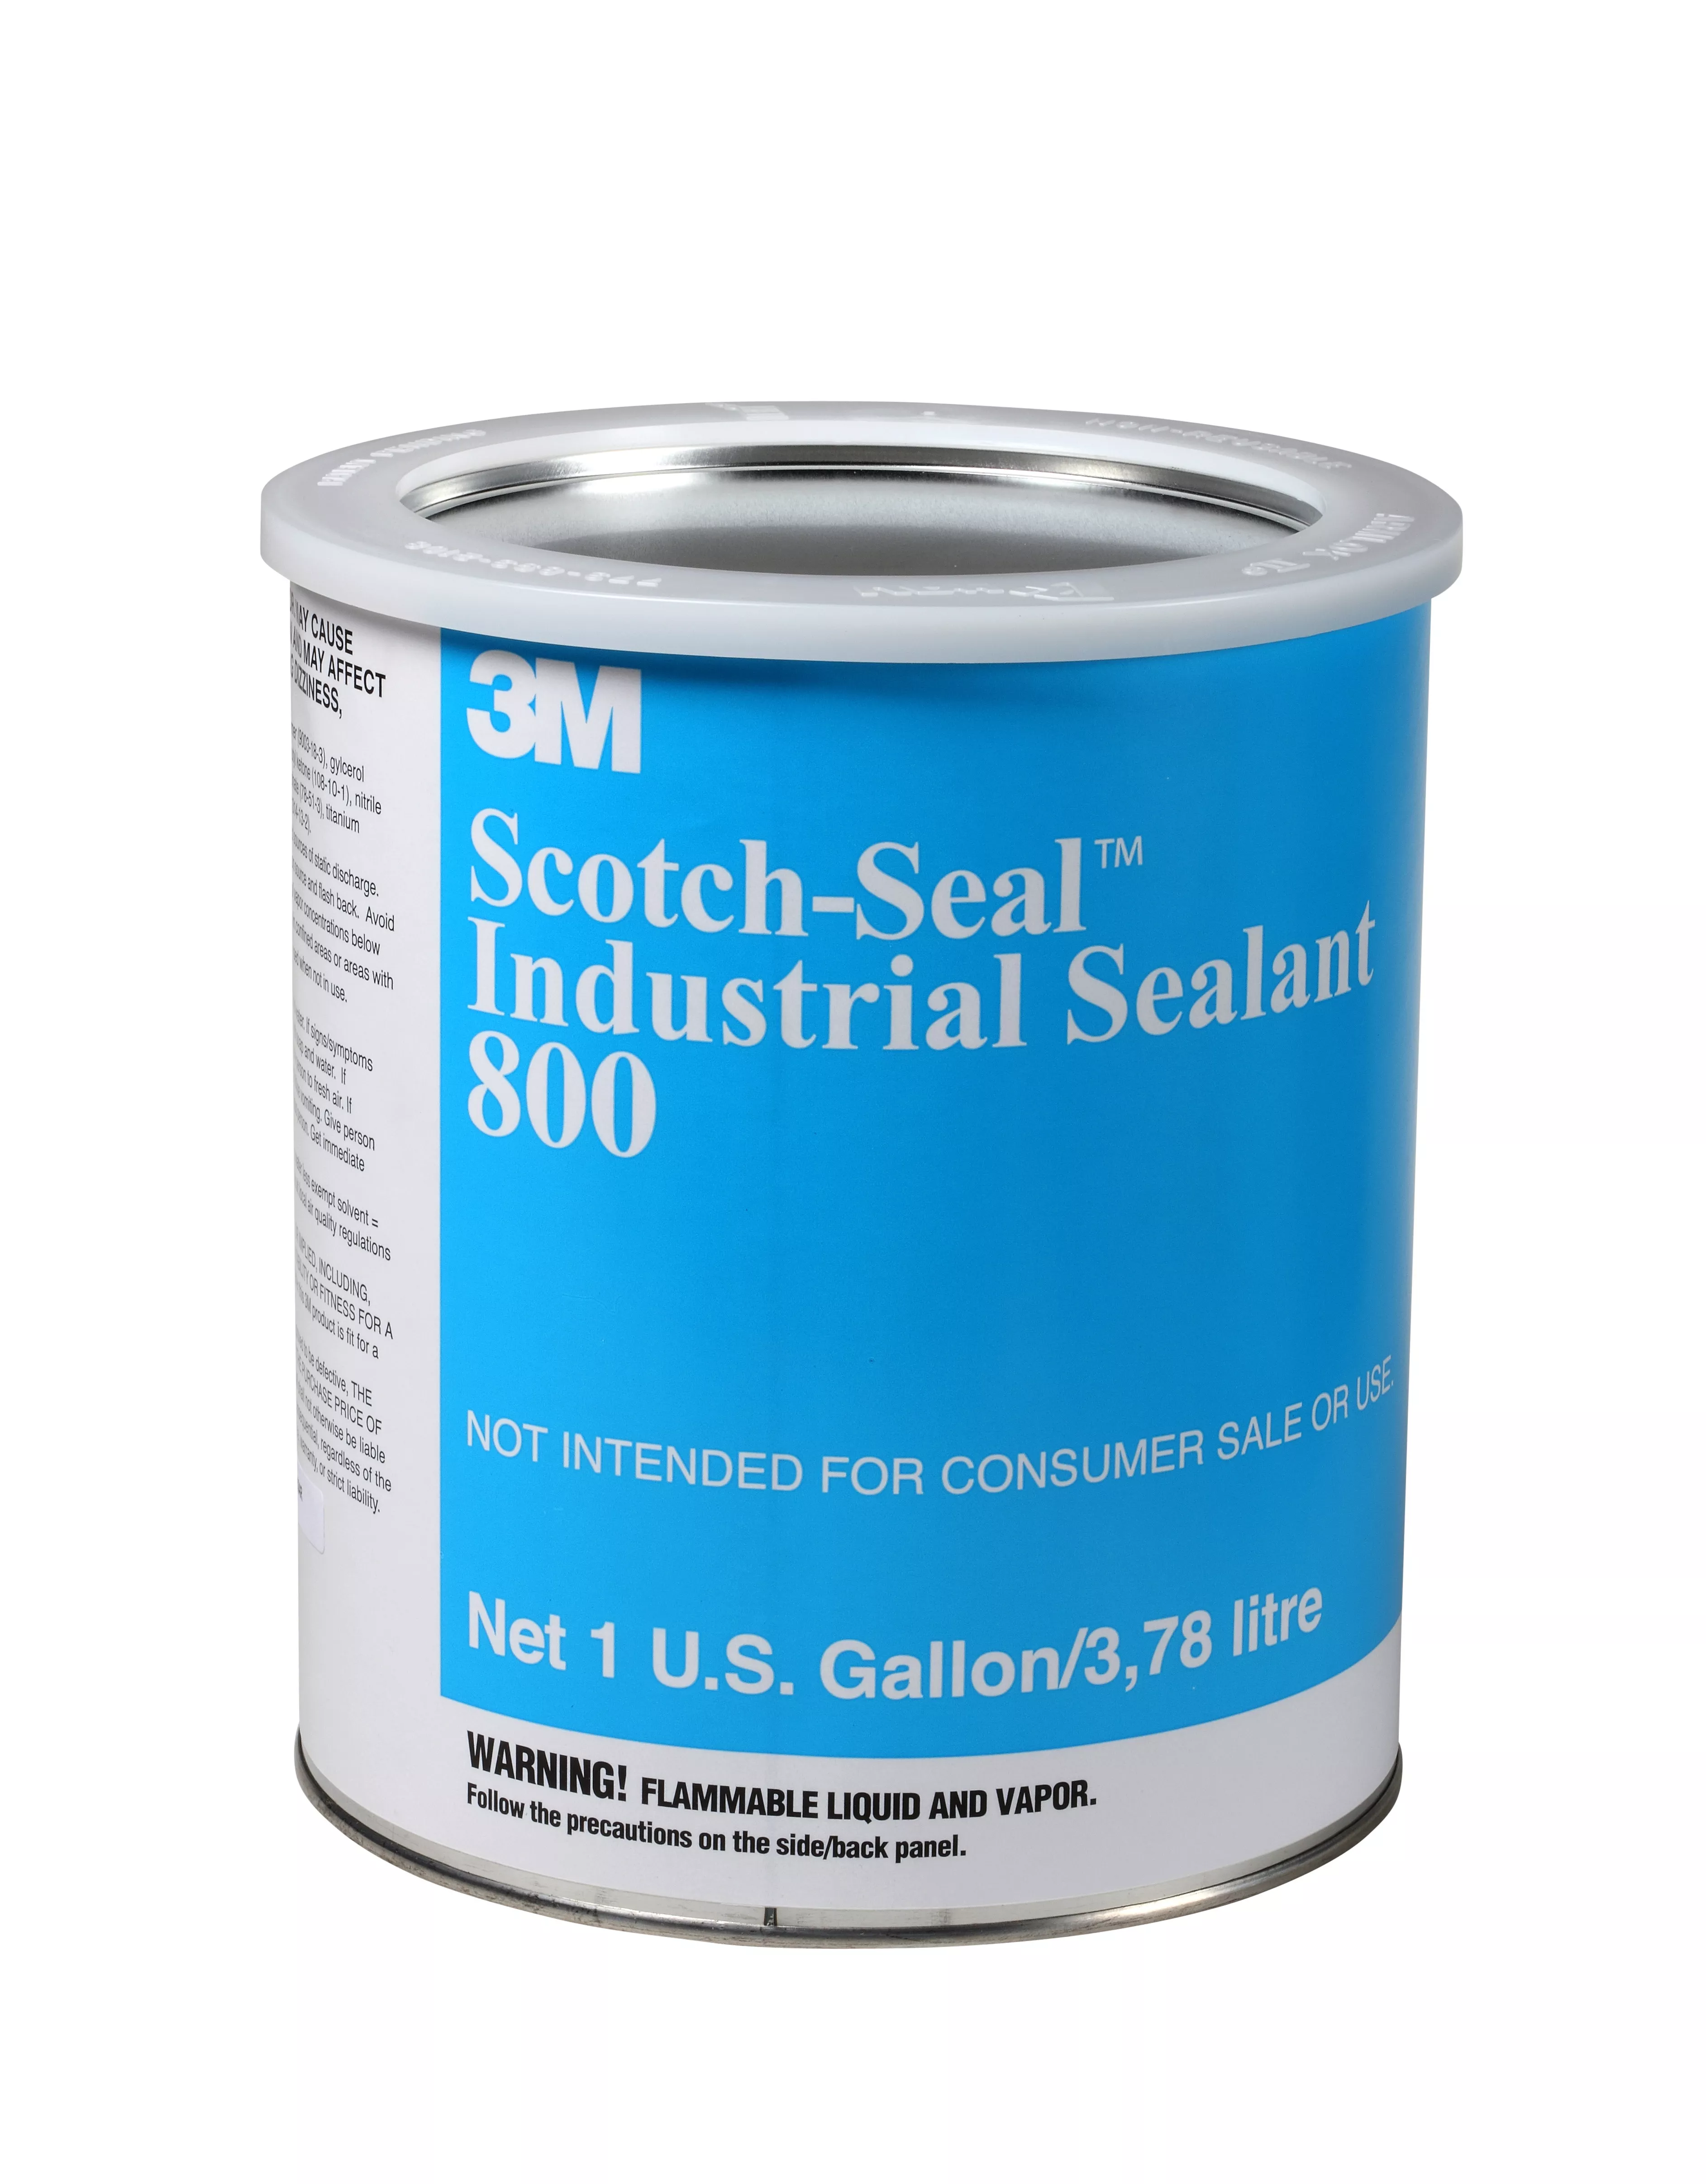 3M™ Scotch-Seal™ Industrial Sealant 800, Reddish Brown, 1 Gallon Drum, 4
Can/Case